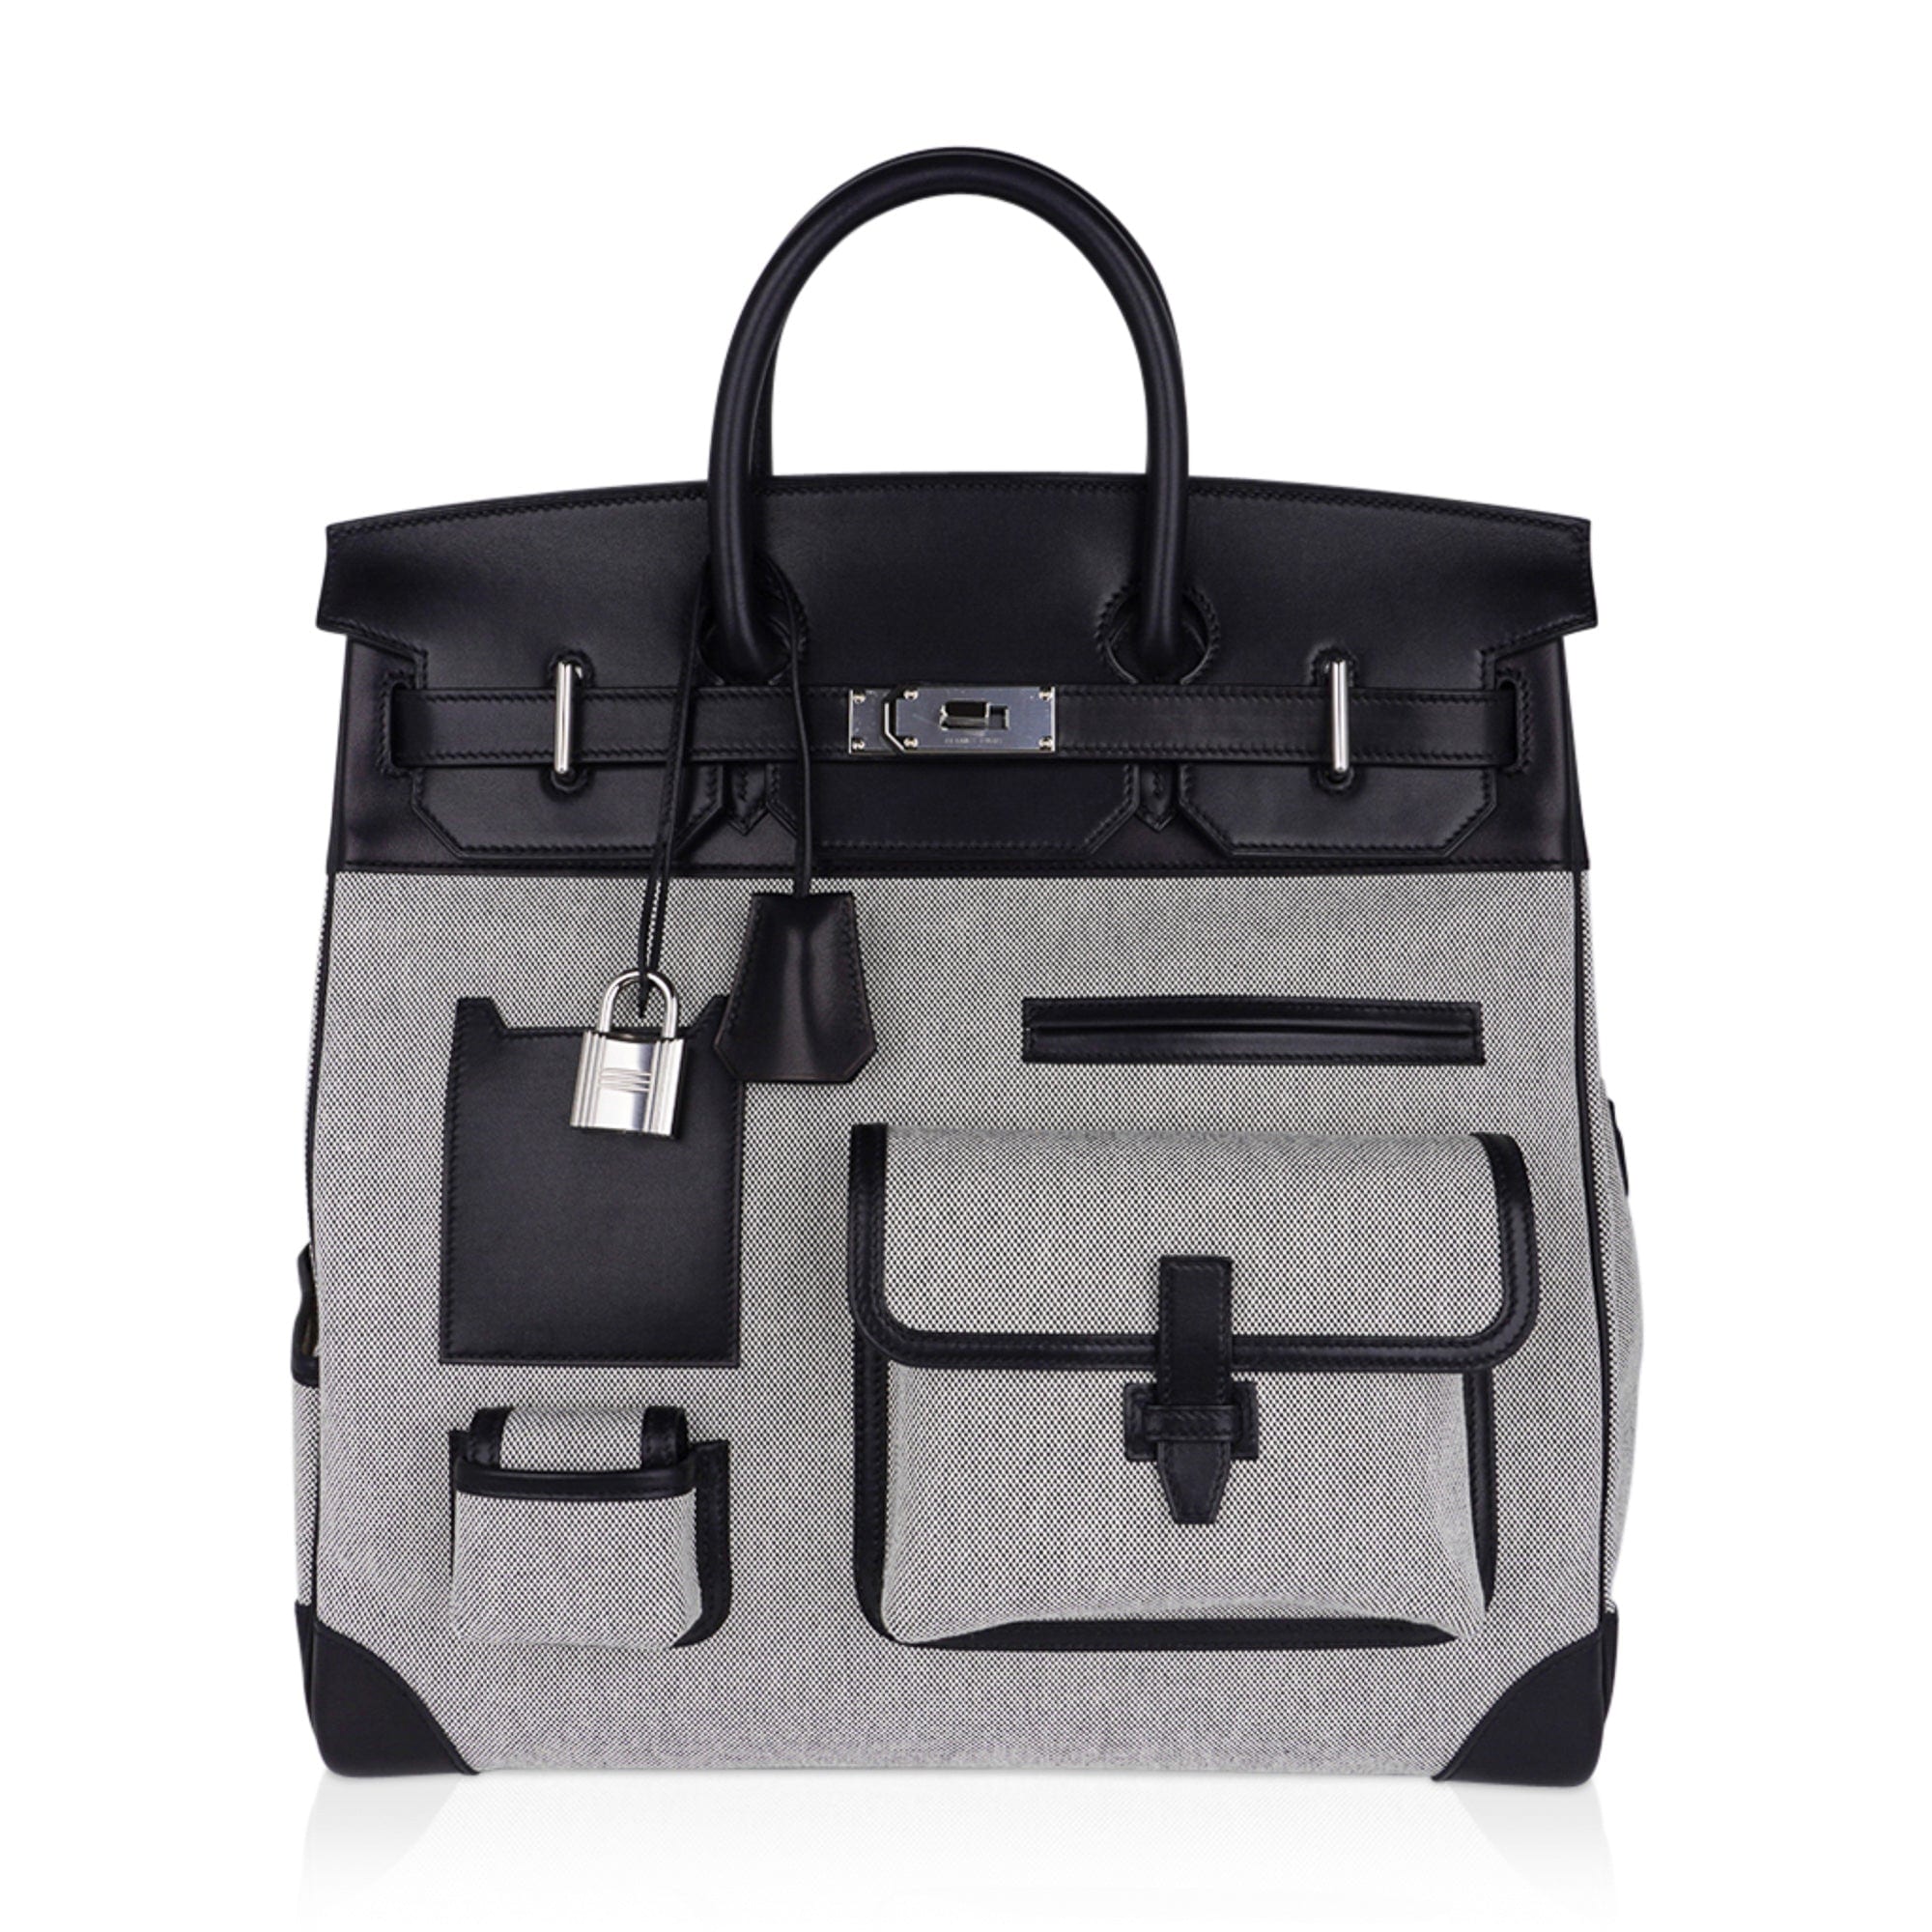 Hermes  Bags, Man bag, Handbag outfit